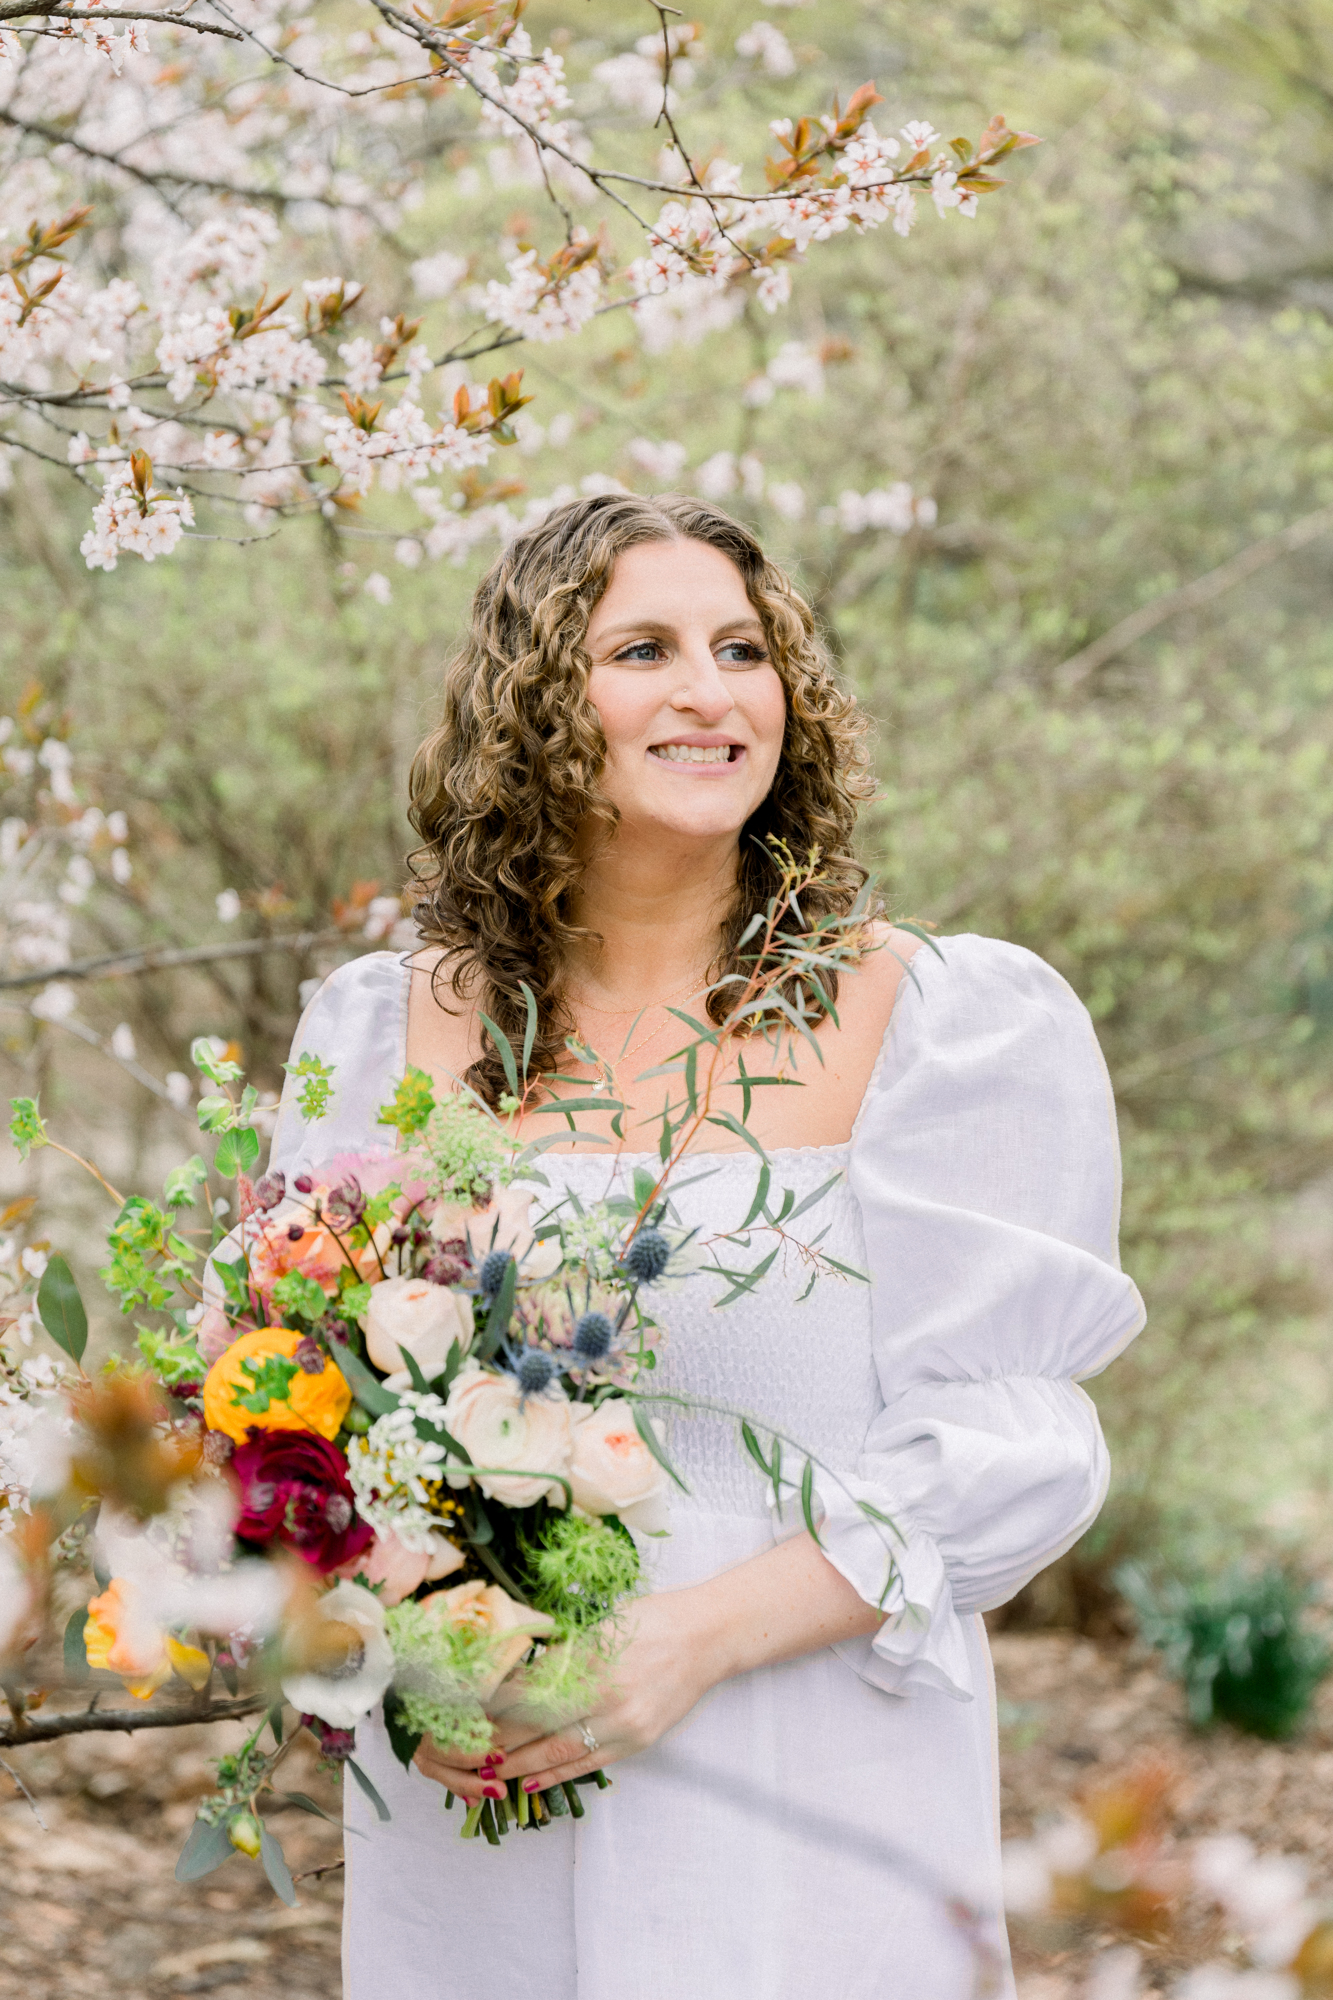 Fashionable Prospect Park Wedding Photos with Springtime Cherry Blossoms